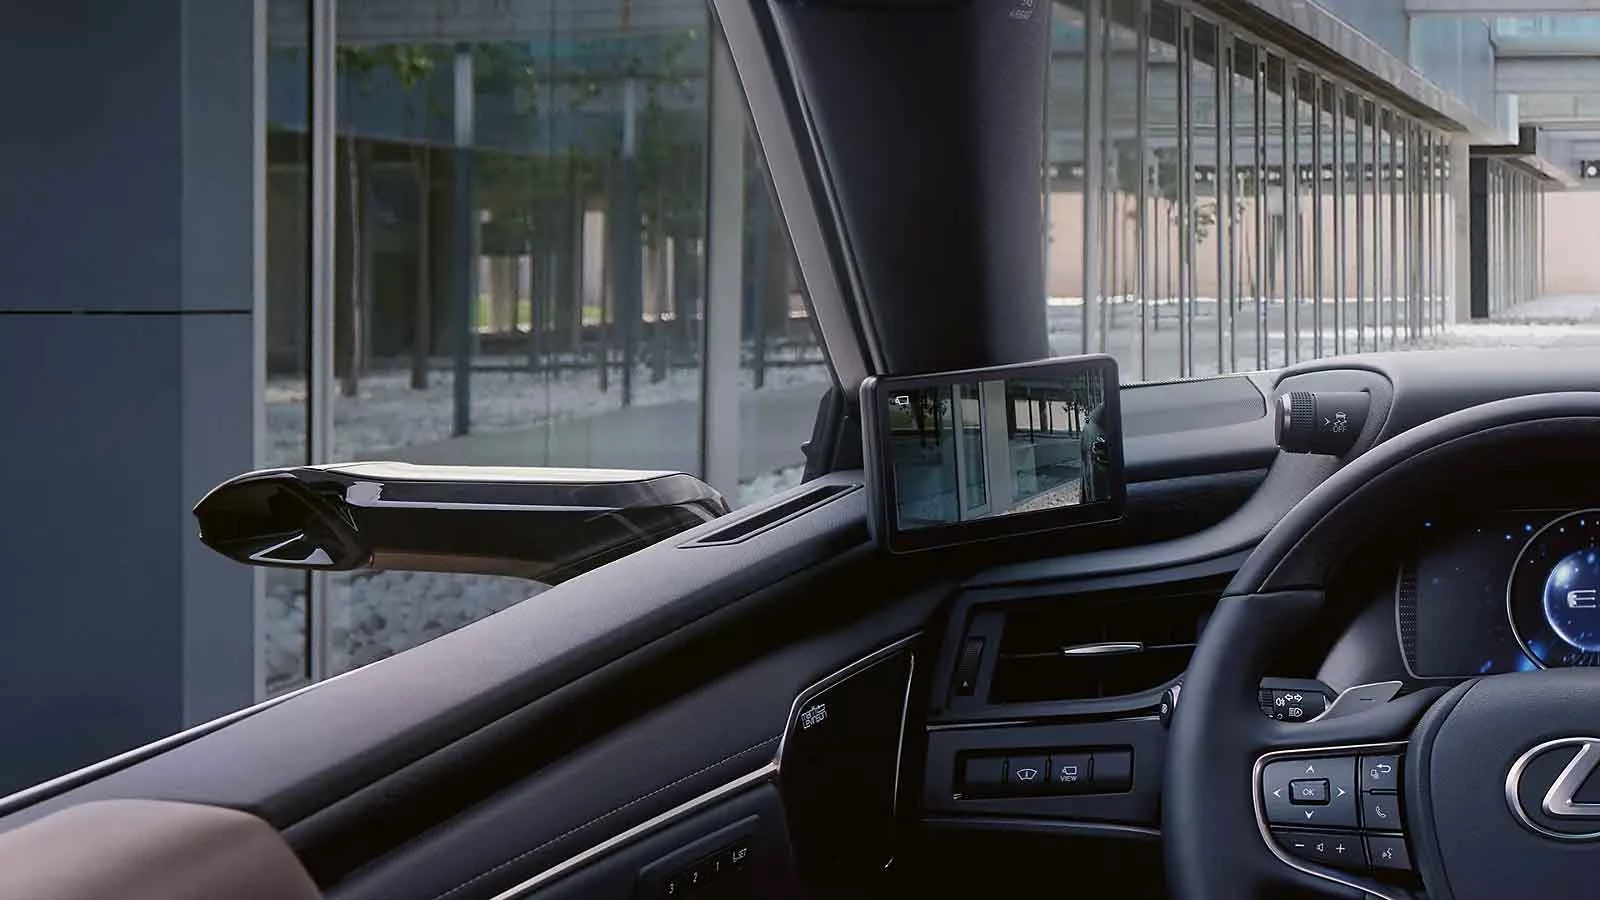 2022 Lexus Es Innovative Technology Digital Side View Monitor 1920X1080 Large Landscape